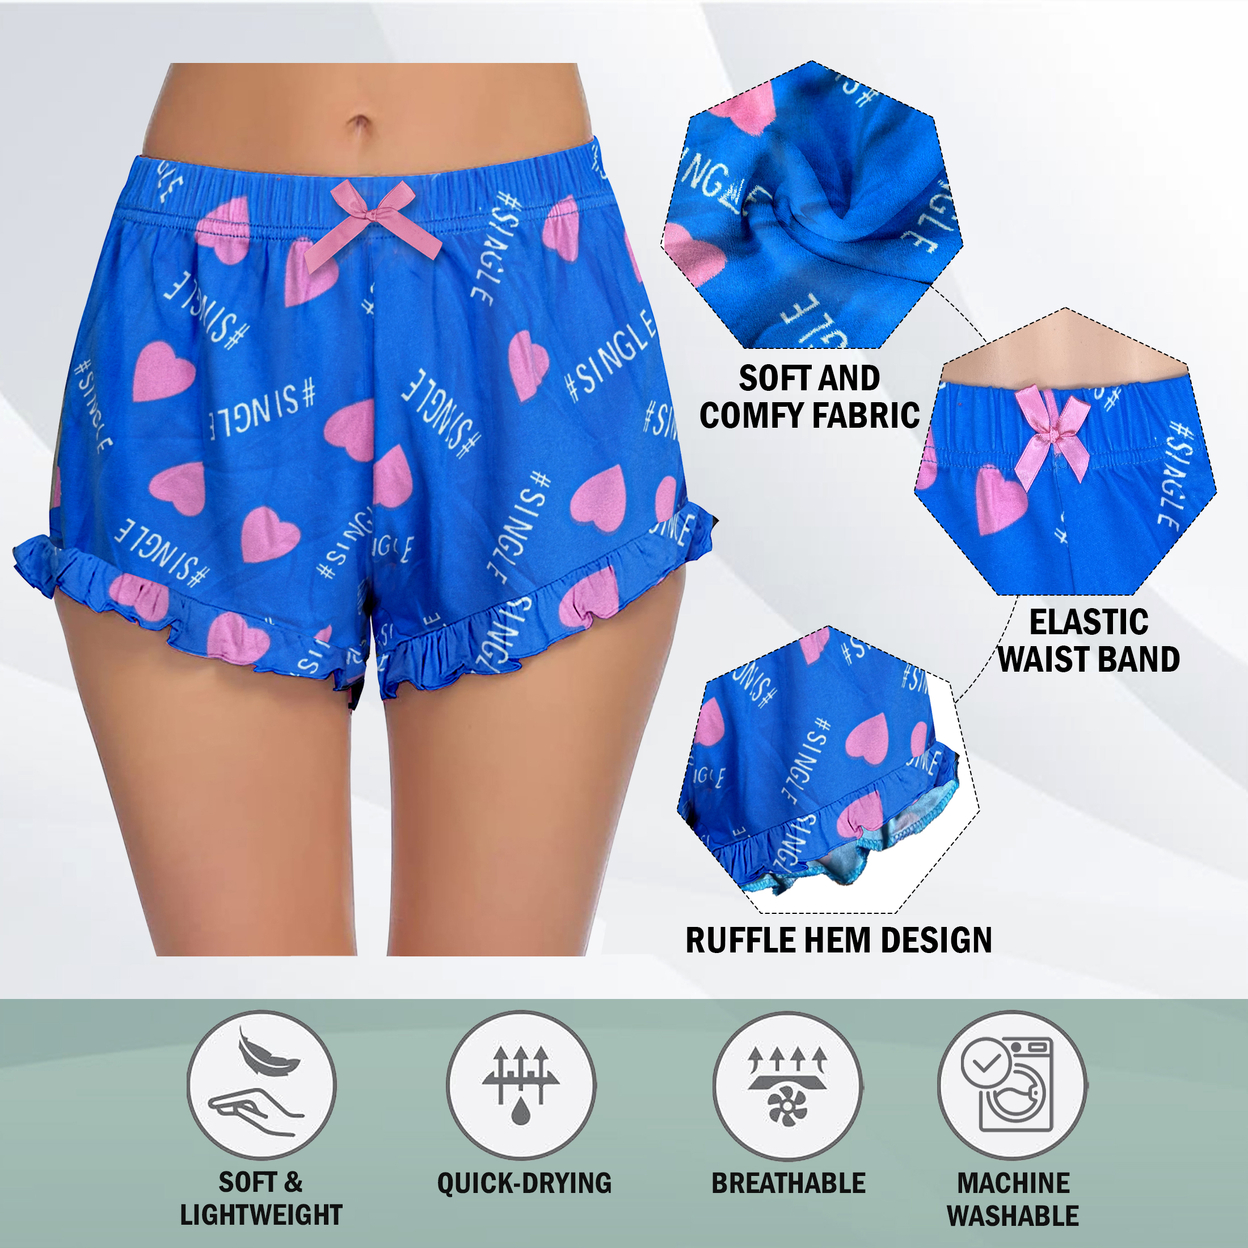 6-Pack: Women's Ultra-Soft Cozy Fun Print Ruffled Hem Sleep Lounge Pajama Shorts - Large, Shapes